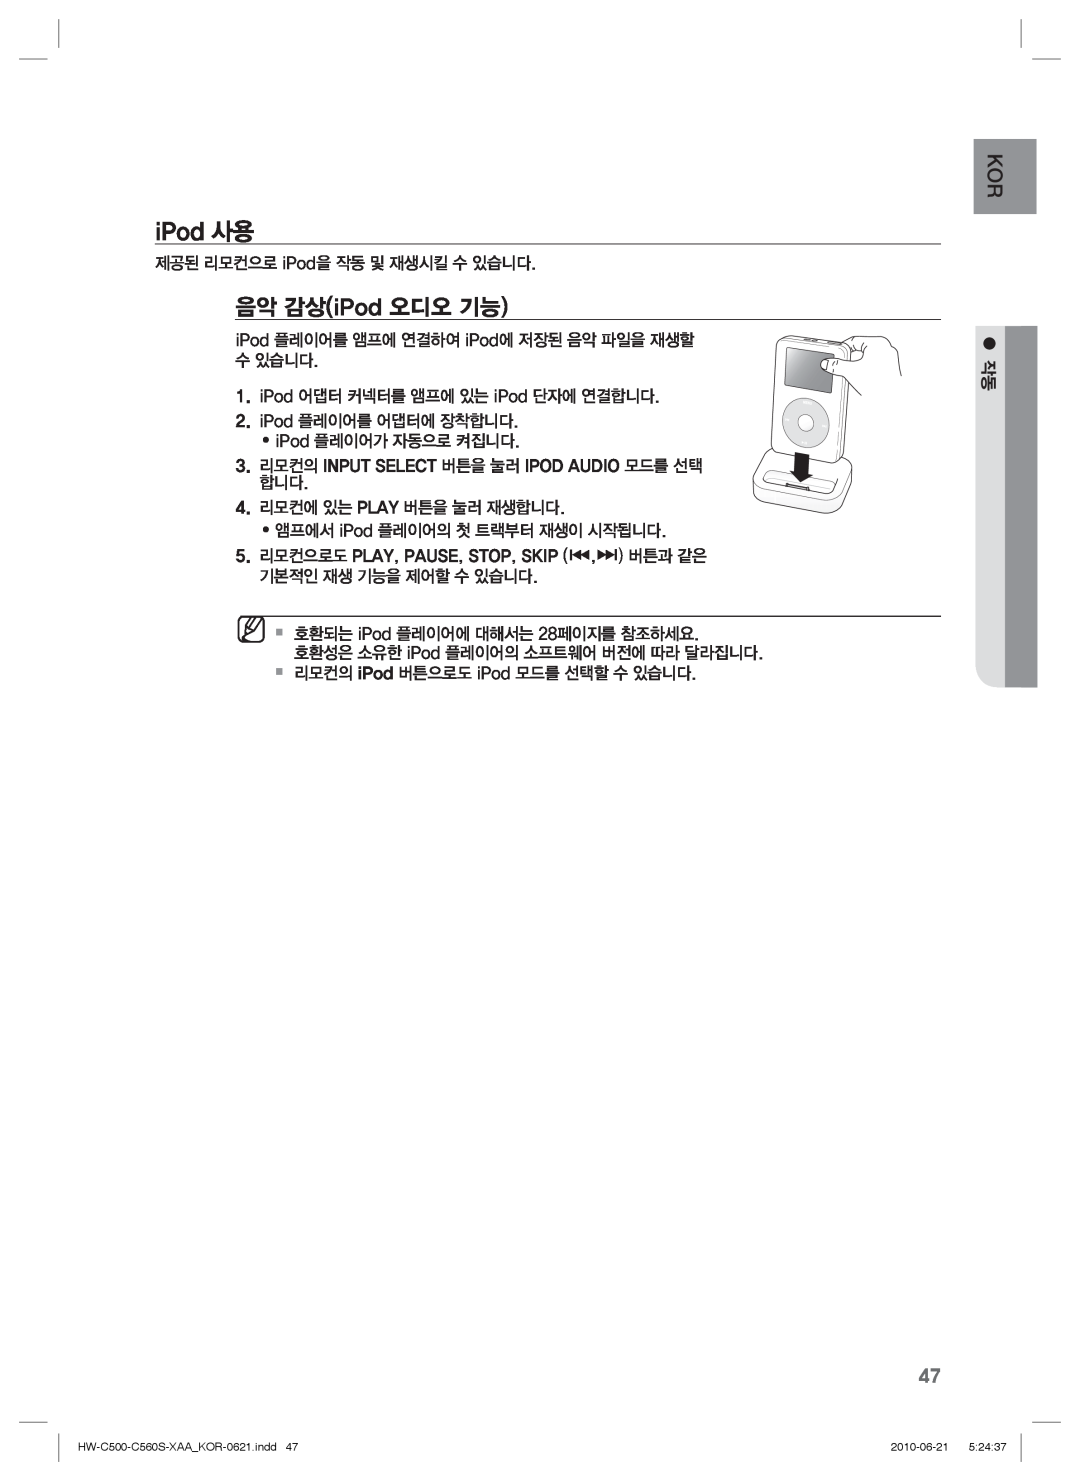 Samsung C560S manual iPod 사용, 음악 감상iPod 오디오 기능 